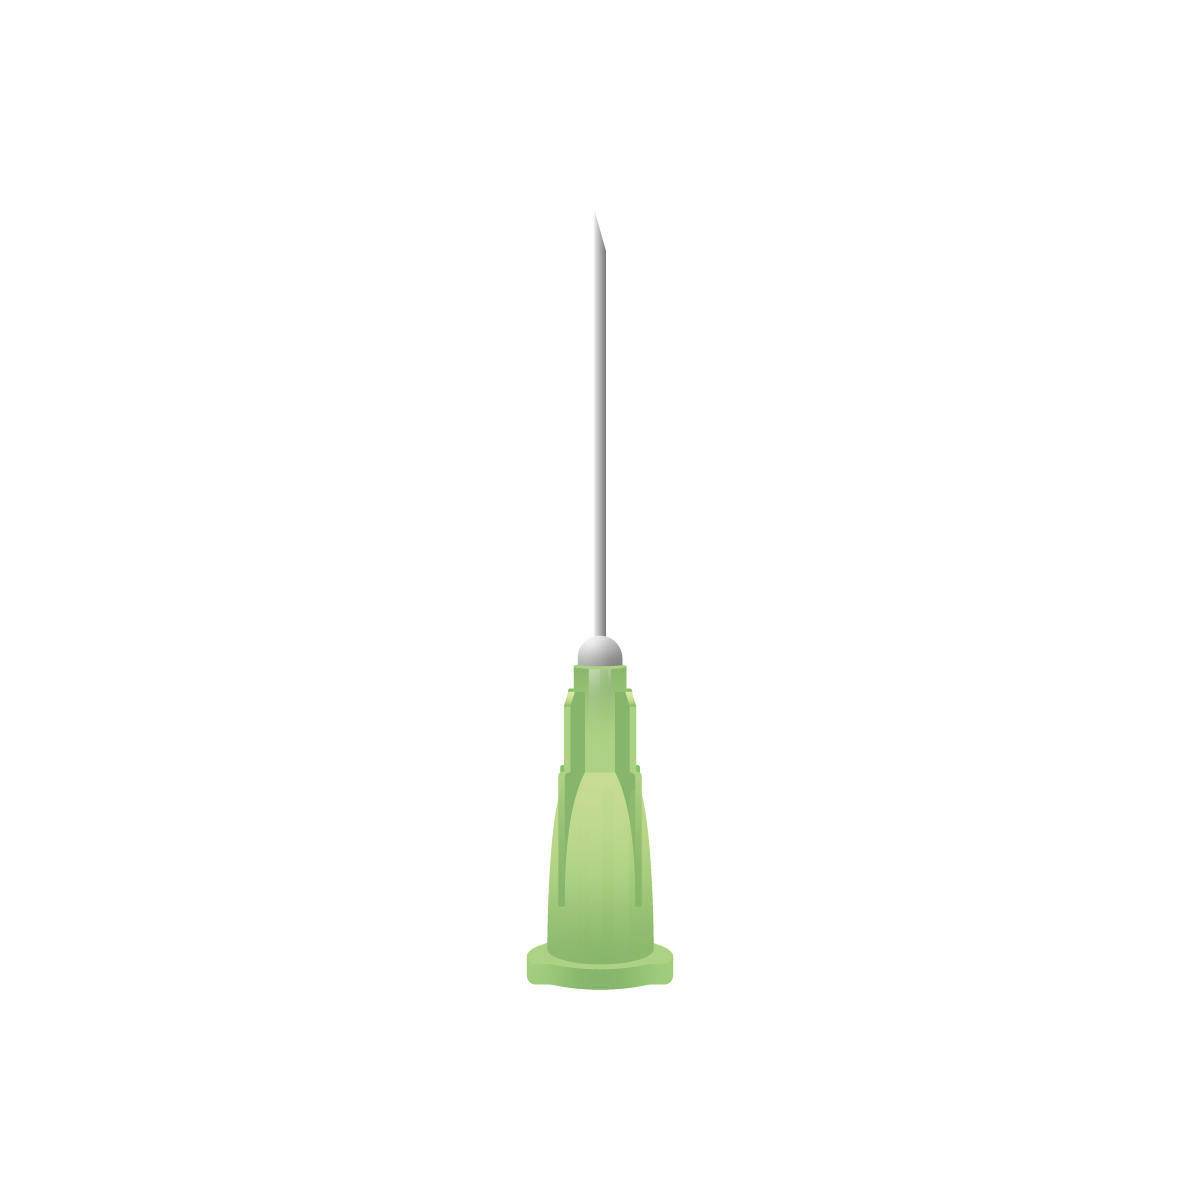 21g Green 1 inch Terumo Needles AN2125R1 UKMEDI.CO.UK